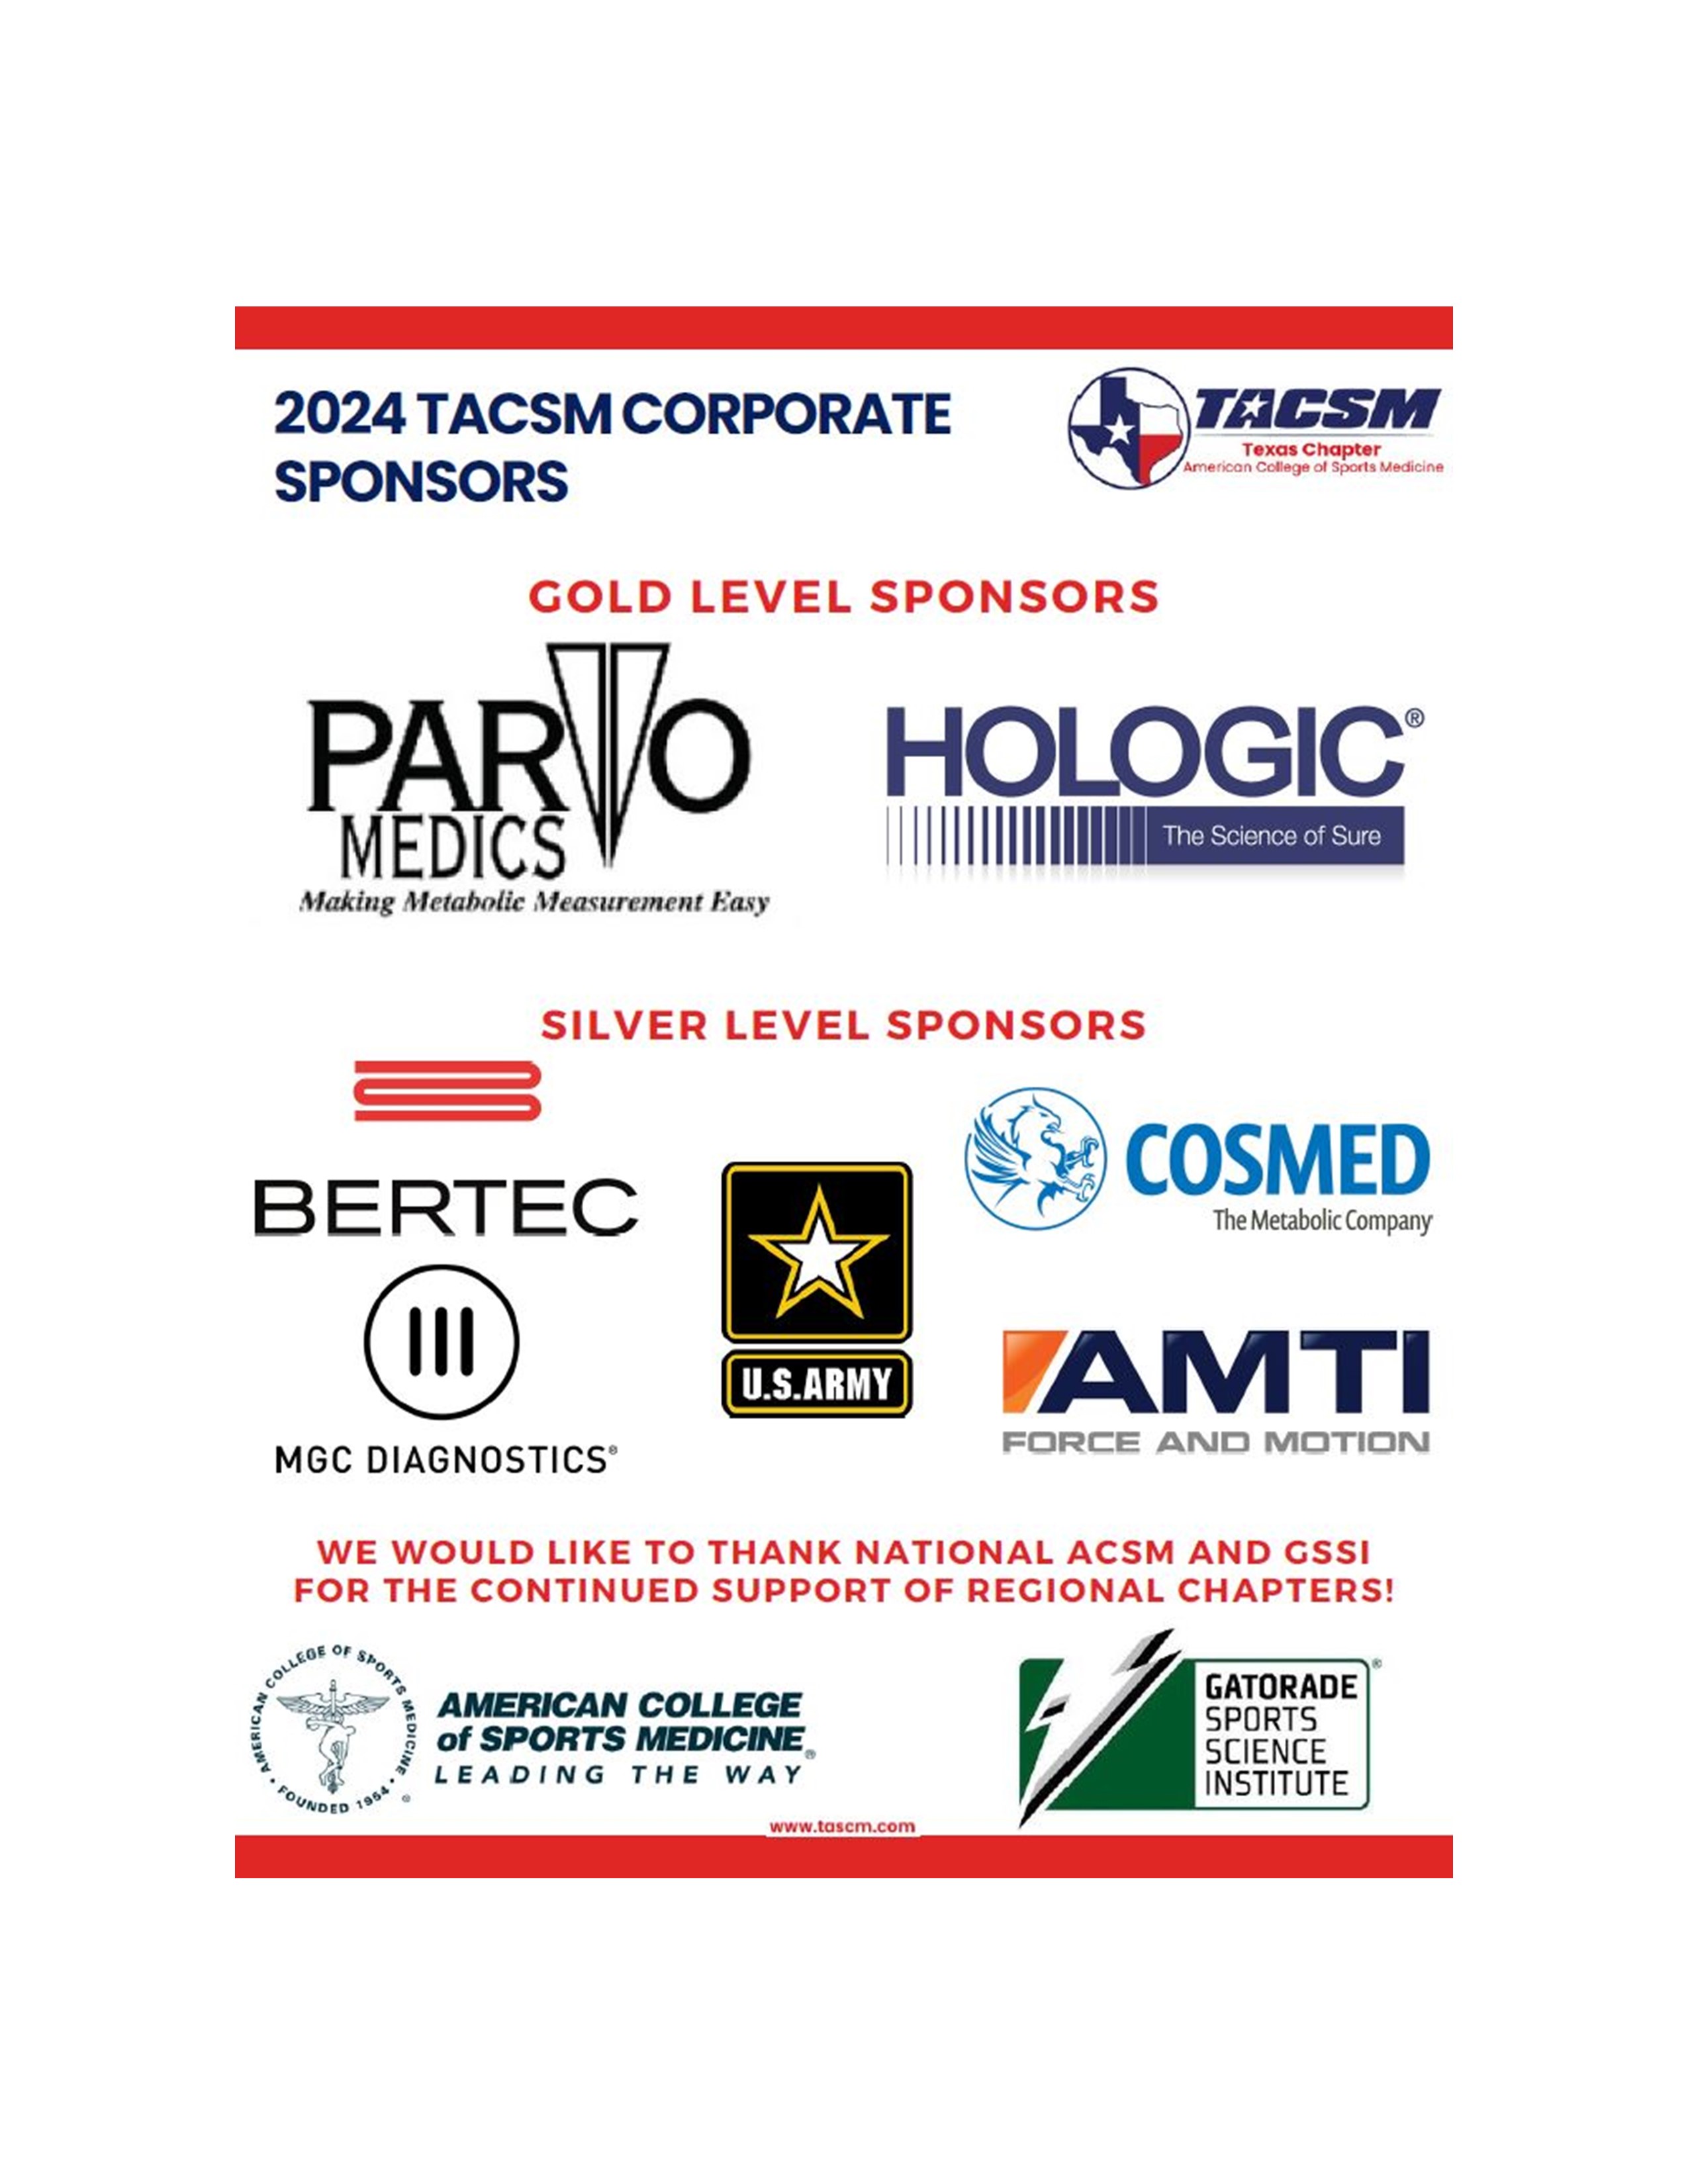 2019 TACSM Sponsor Corporate